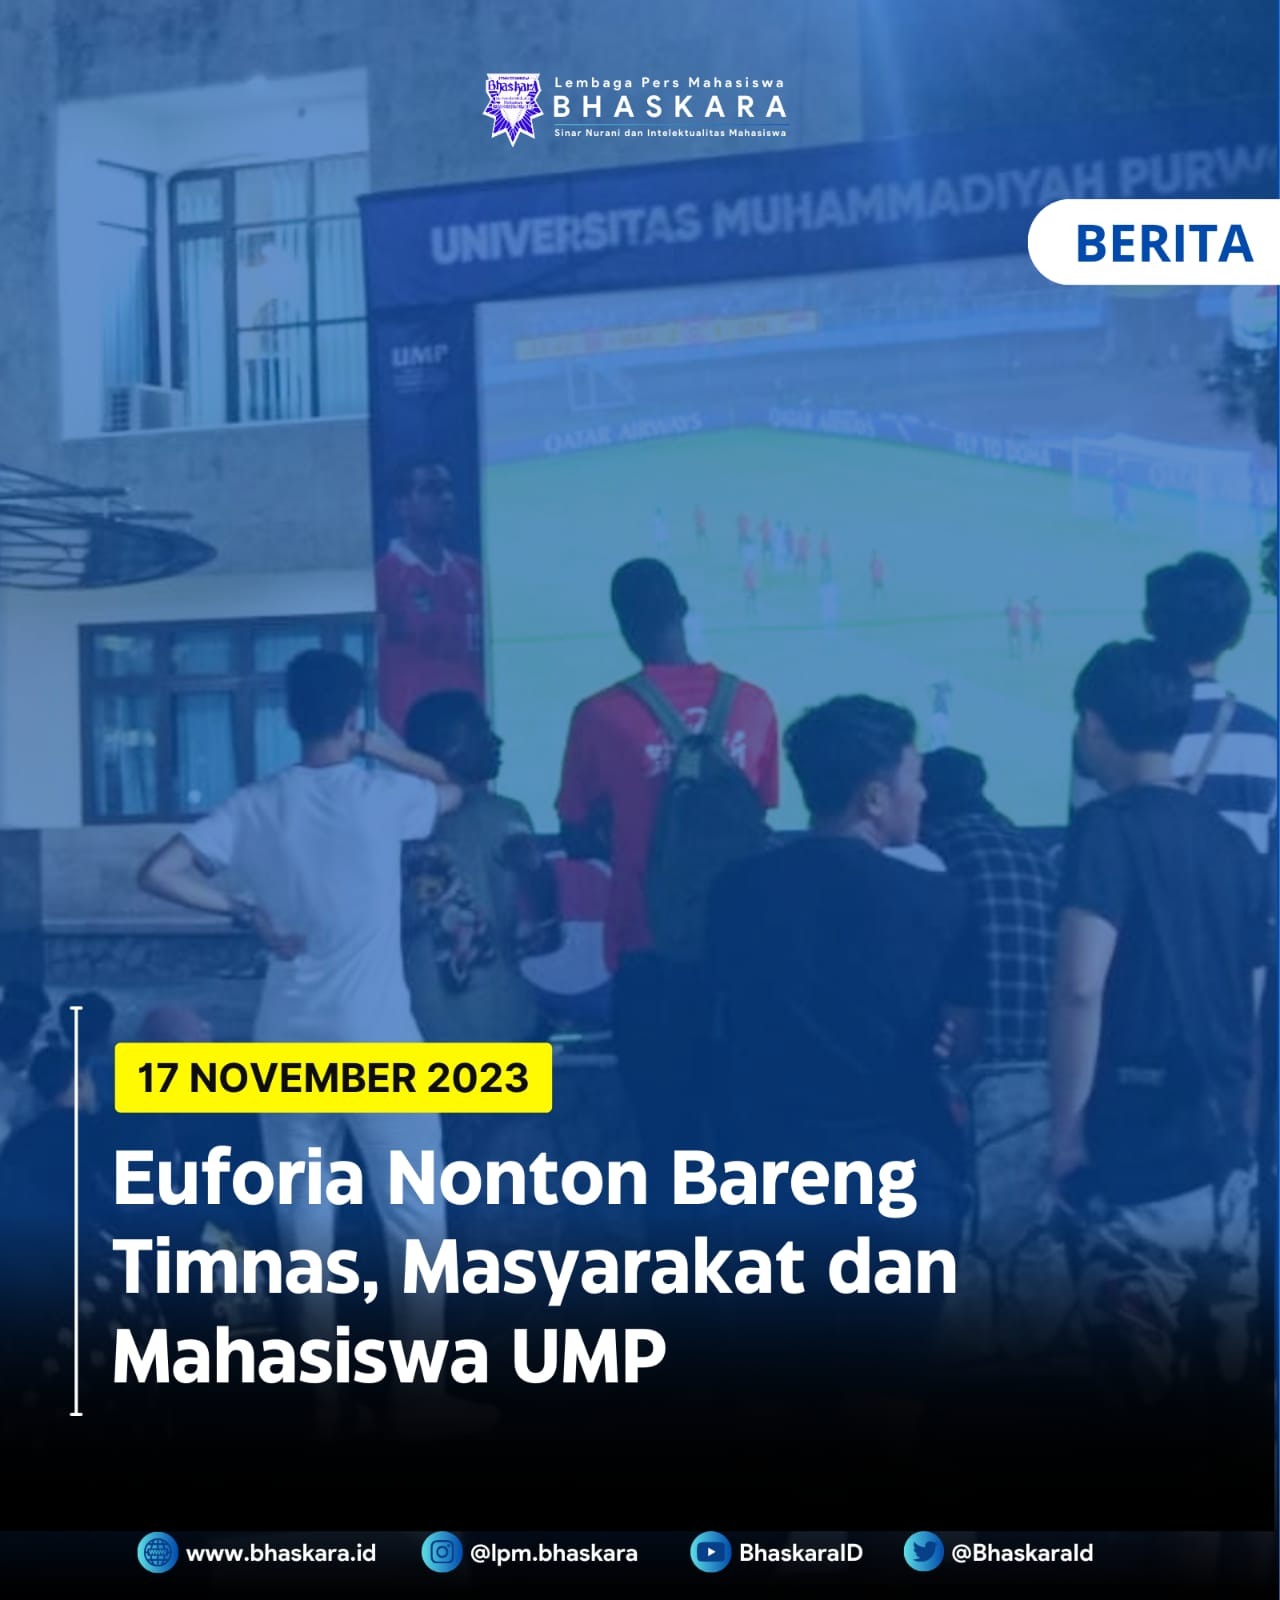 Euforia Nonton Bareng Timnas, Mahasiswa dan Masyarakat UMP